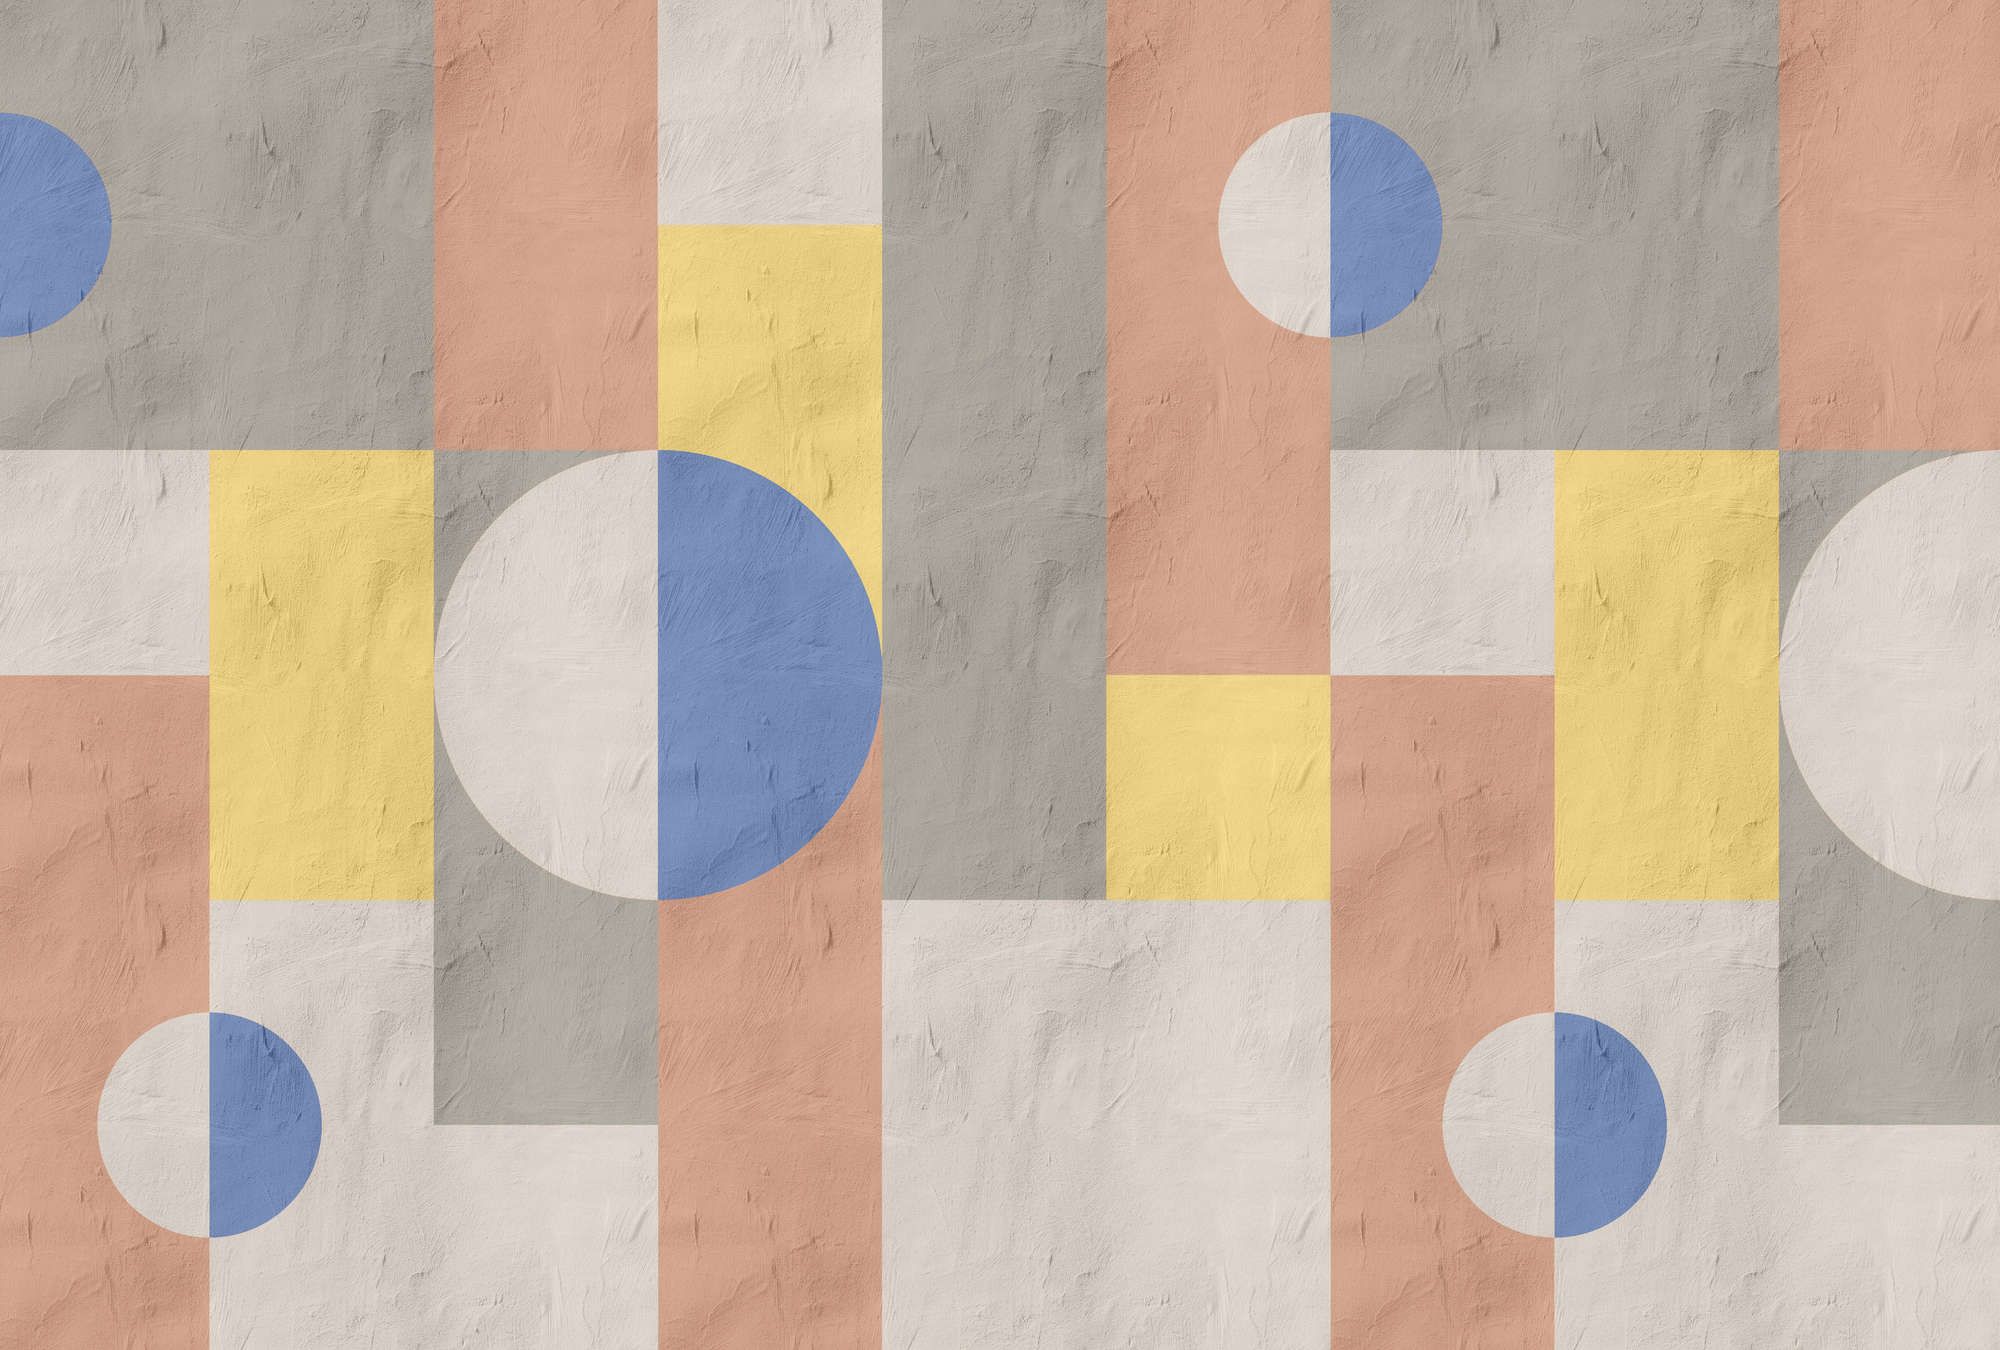             Photo wallpaper »estrella 1« - Graphic pattern in clay plaster look - Blue, yellow, orange | matt, smooth non-woven fabric
        